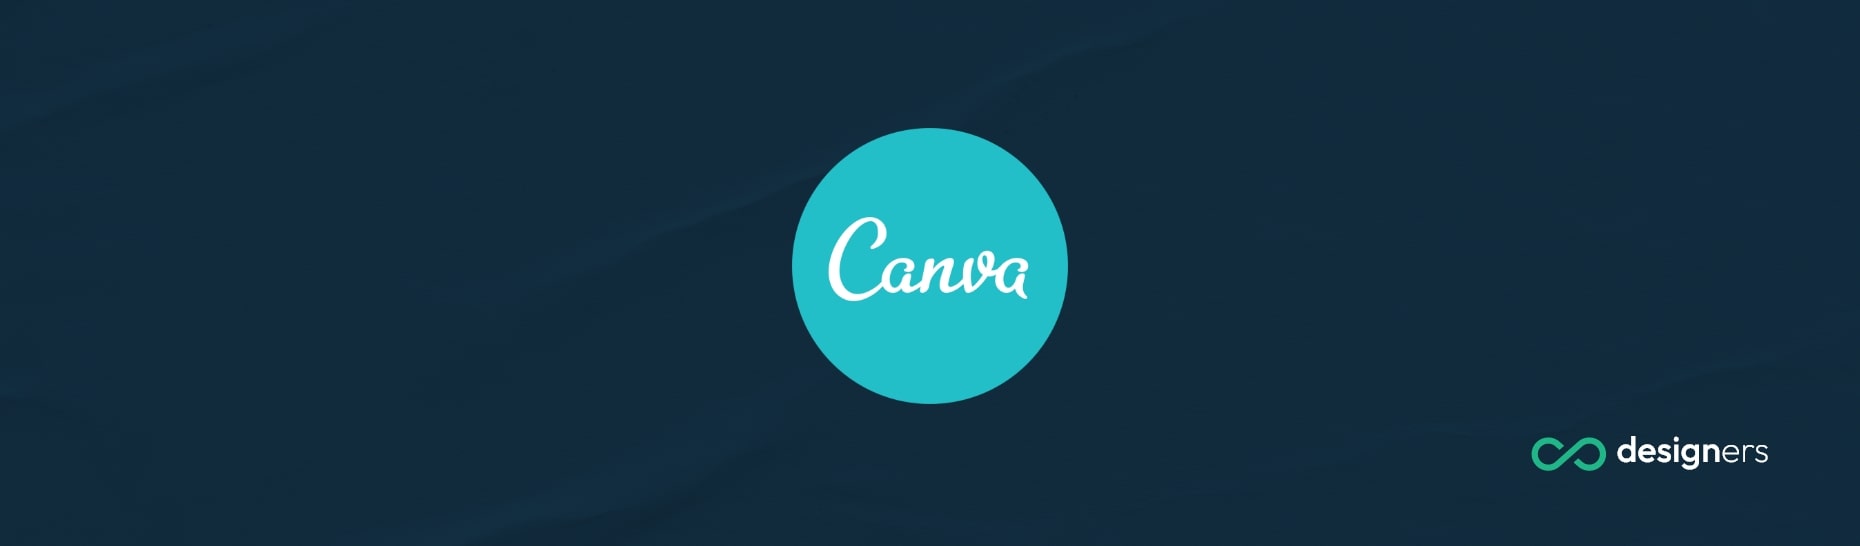 Does Canva Make Profit?